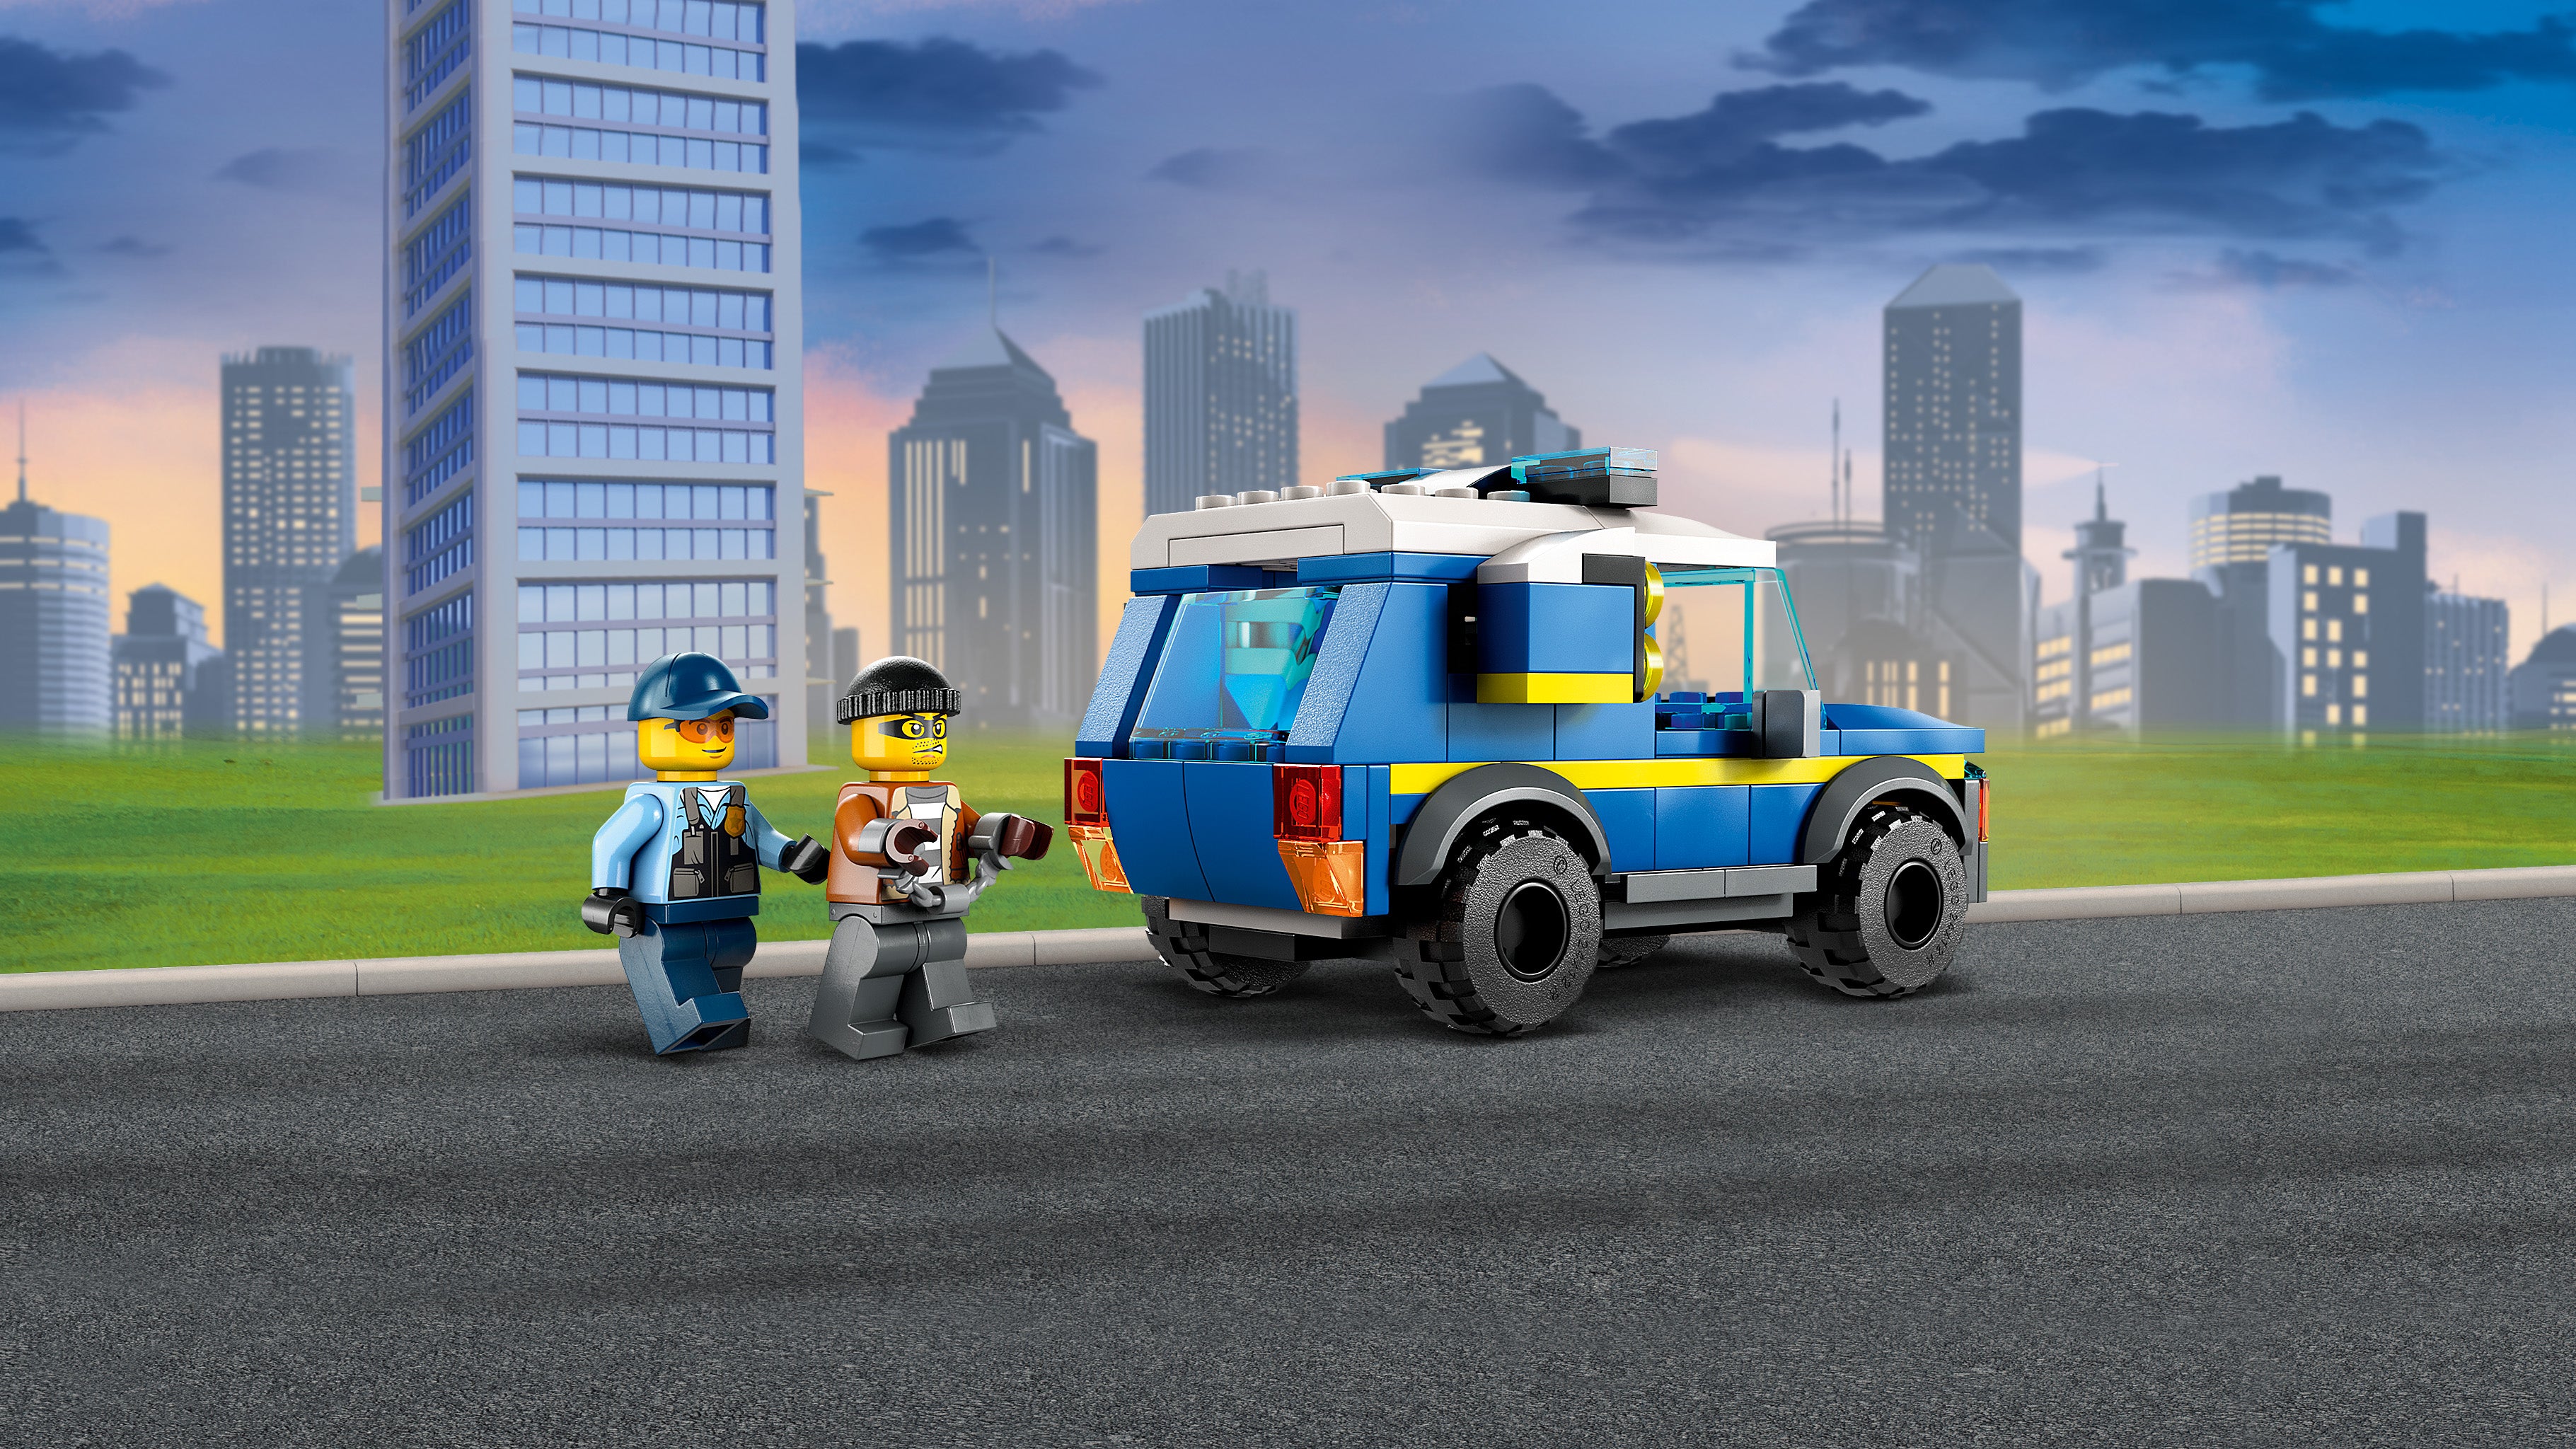 Lego 60371 Emergency Vehicles HQ